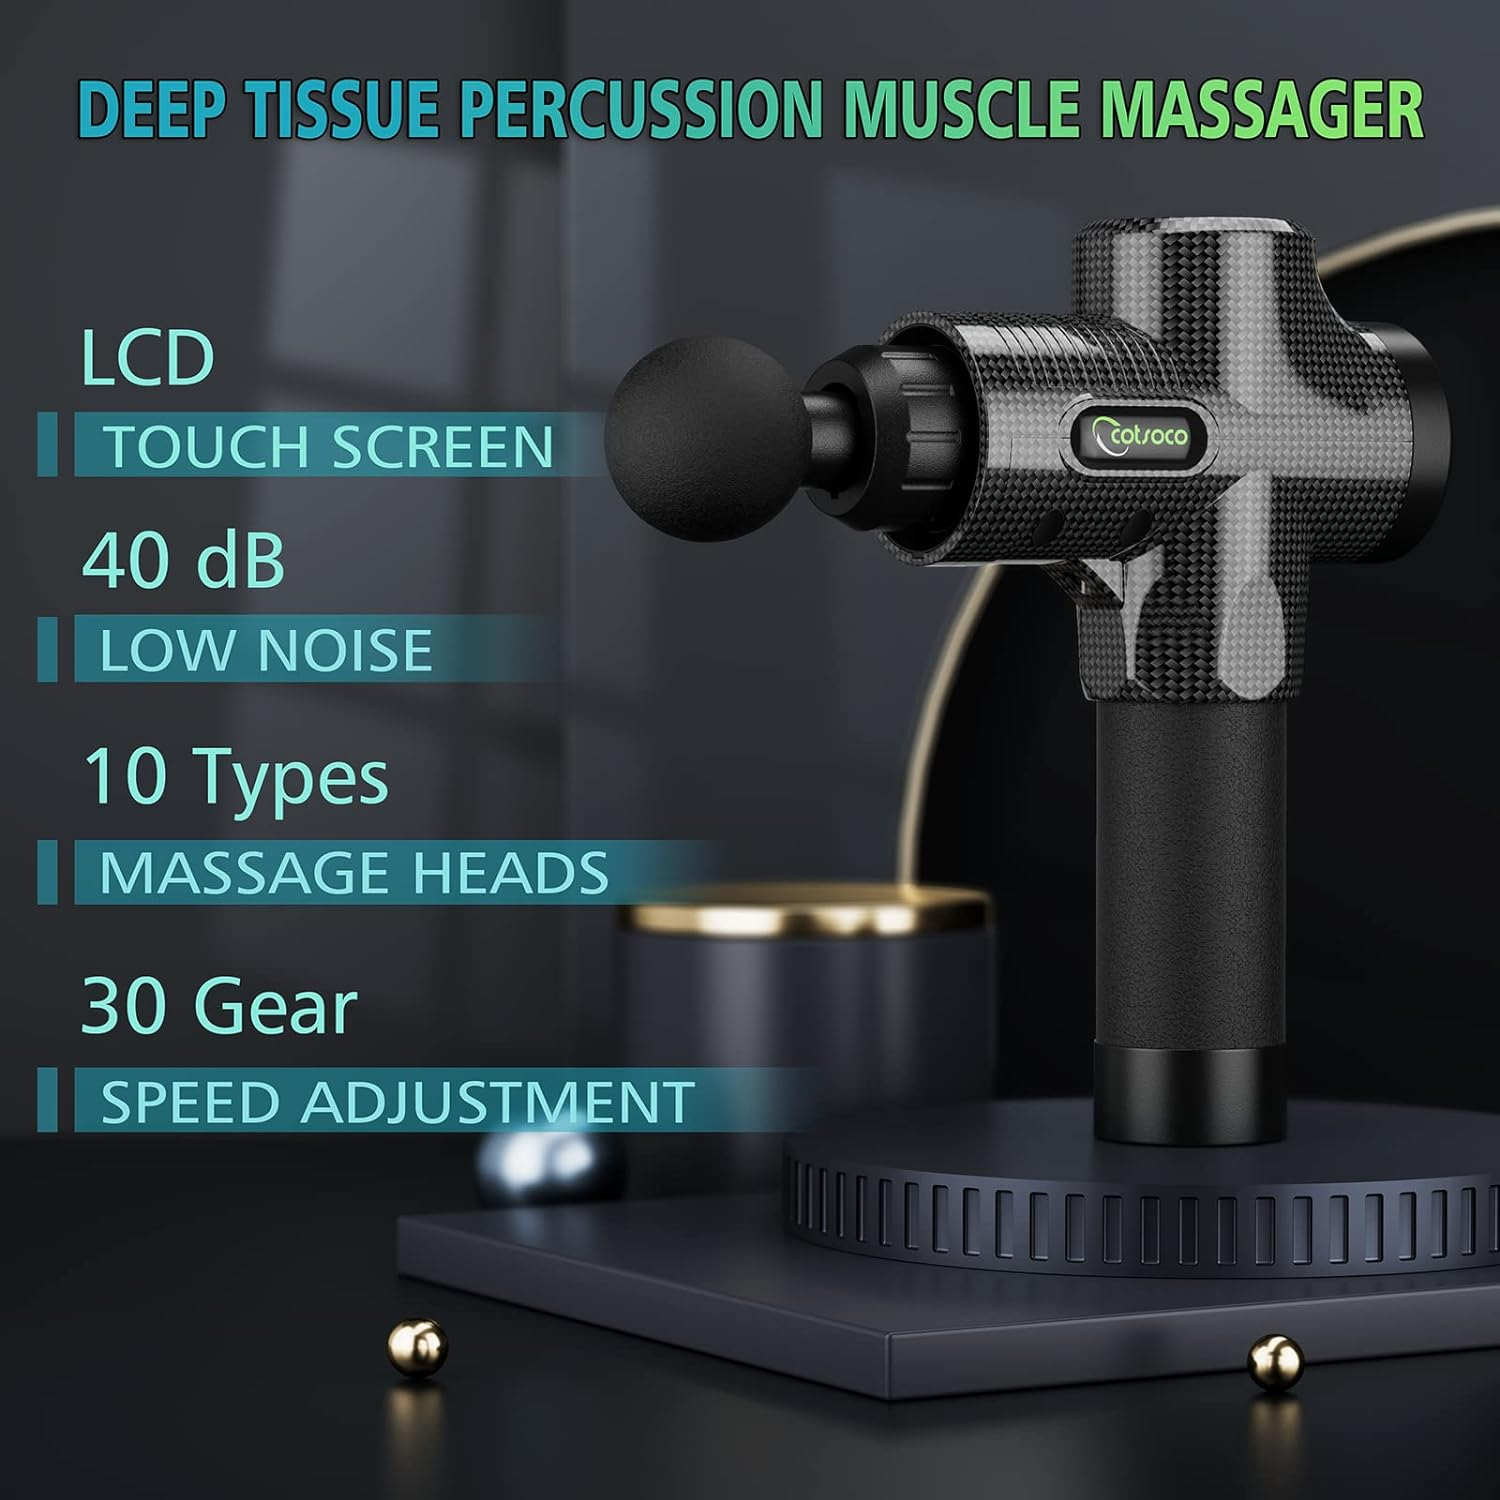 Handheld Muscle Massage Gun Deep Tissue, Percussion Back Massager Gun for Athletes,Pain Relief, Super Quiet Electric Sport Massager